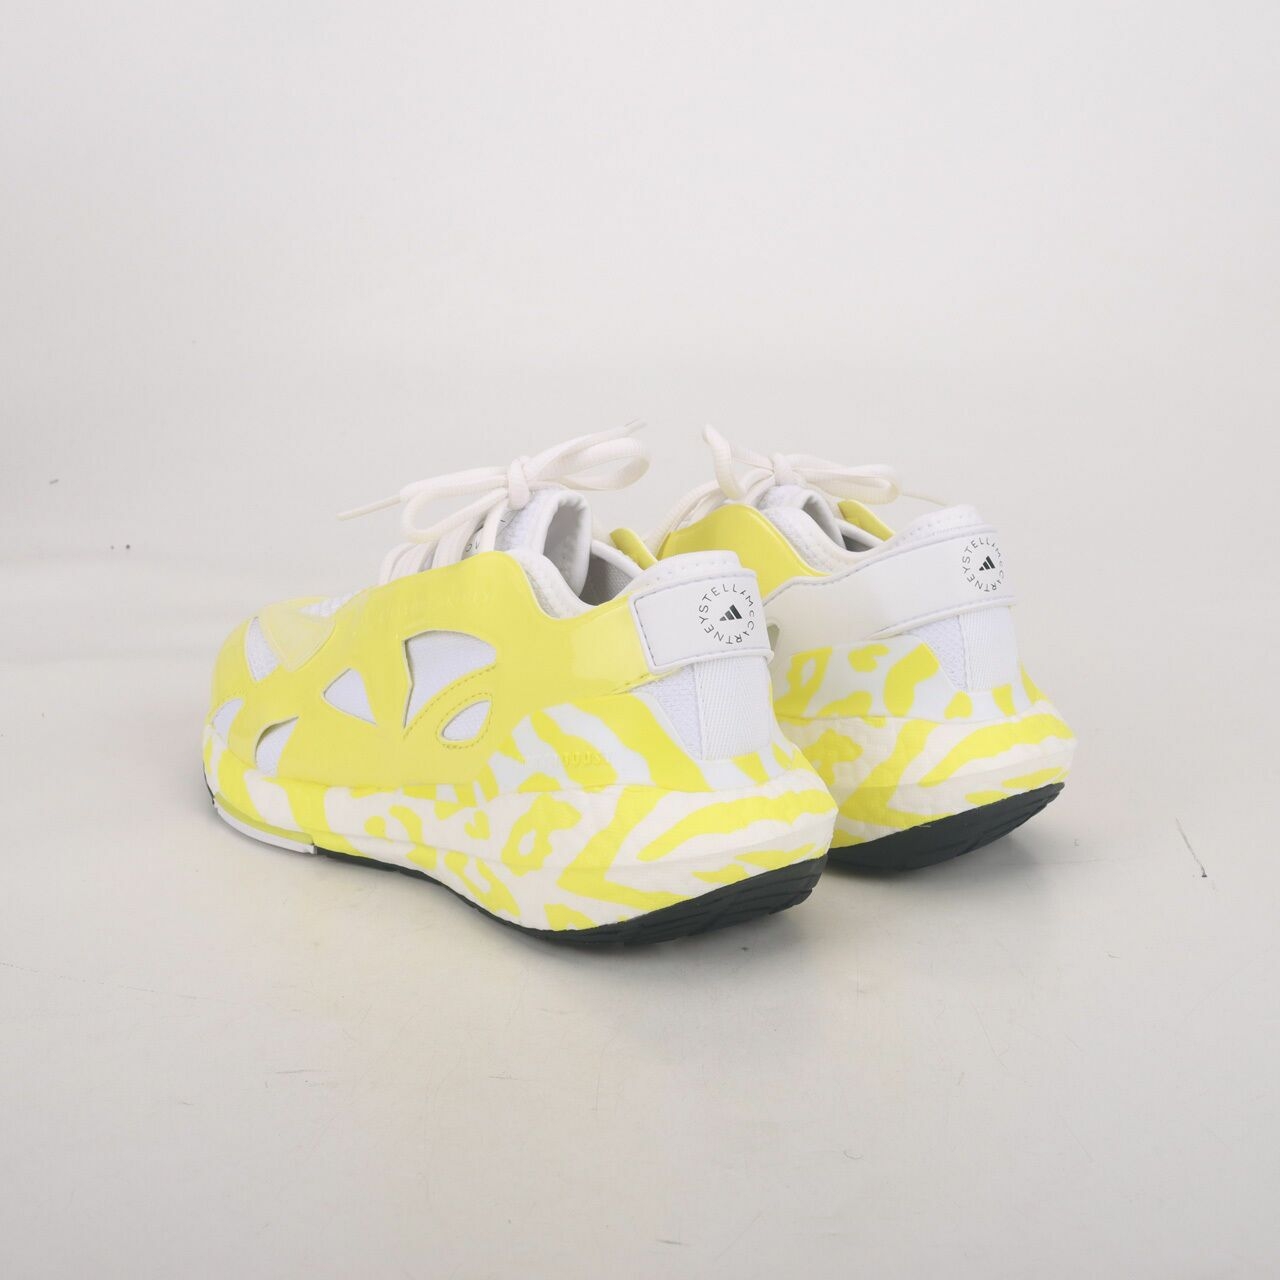 Adidas Stella McCartney ASMC Ultraboost 22 Graphic Yellow Sneakers